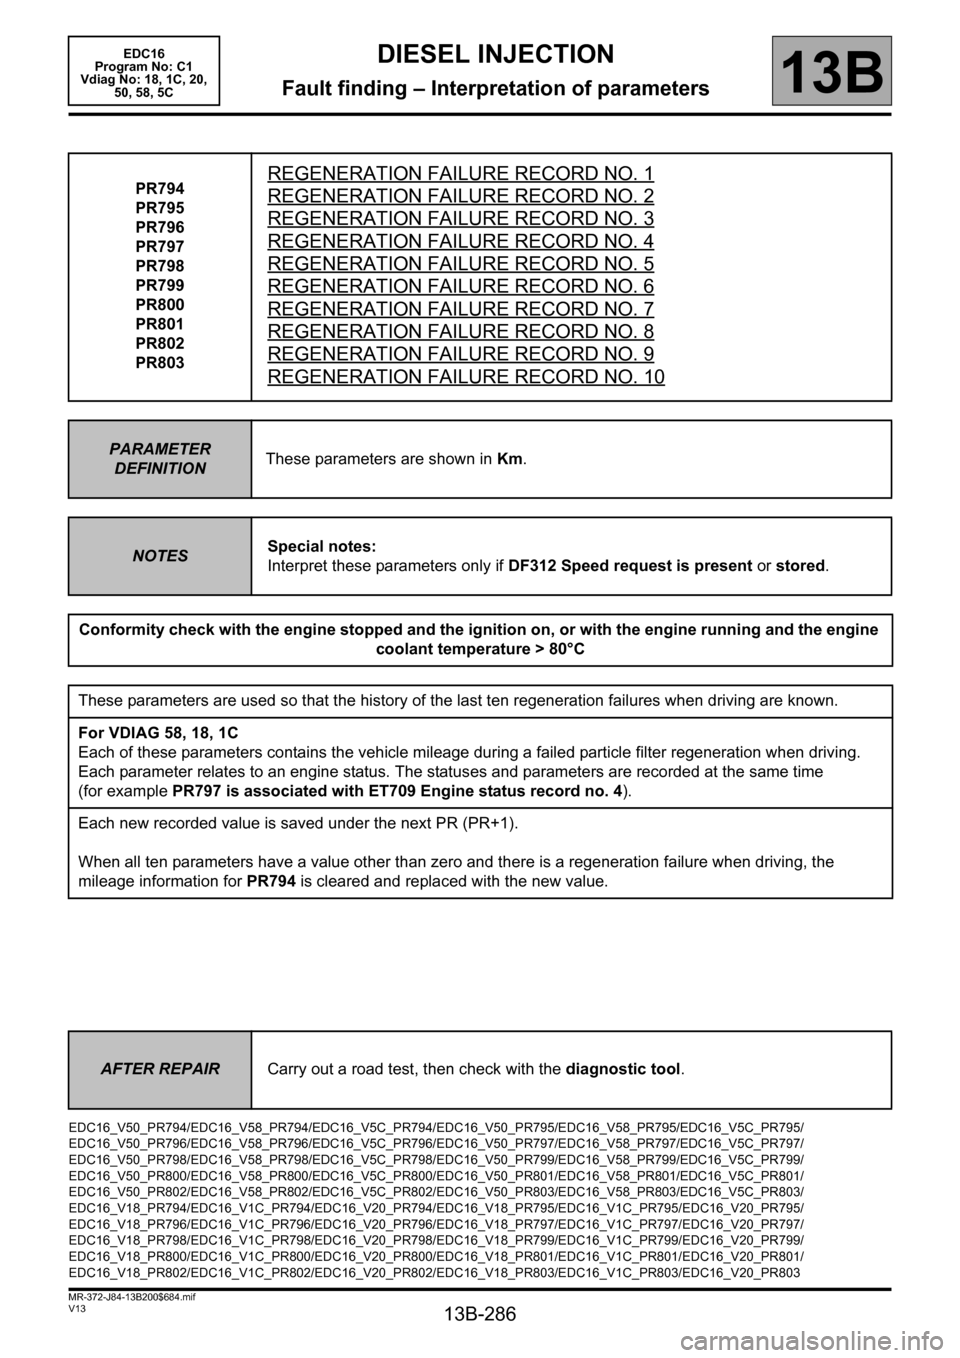 RENAULT SCENIC 2011 J95 / 3.G Engine And Peripherals EDC16 Workshop Manual 13B-286
MR-372-J84-13B200$684.mif
V13
DIESEL INJECTION
Fault finding – Interpretation of parameters
EDC16  
Program No: C1 
Vdiag No: 18, 1C, 20, 
50, 58, 5C
13B
PR794
PR795
PR796
PR797
PR798
PR799
